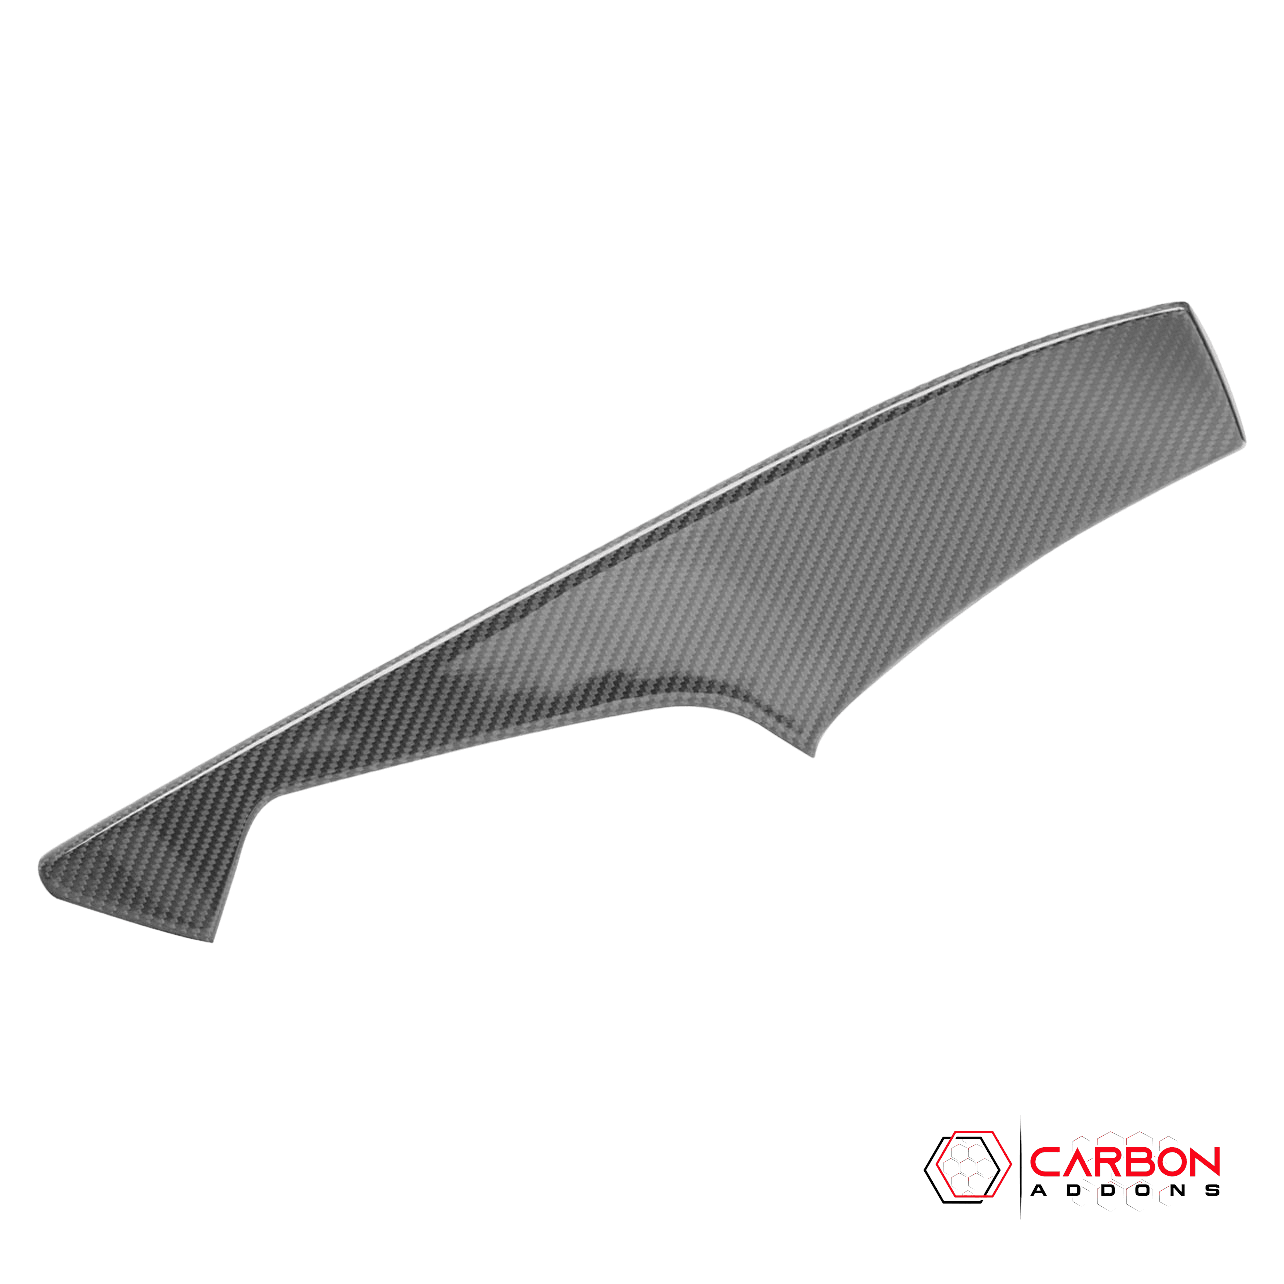 C7 Corvette 2014-2019 Carbon Fiber Driver Side Door & Window Switch Panel Cover - carbonaddons Carbon Fiber Parts, Accessories, Upgrades, Mods